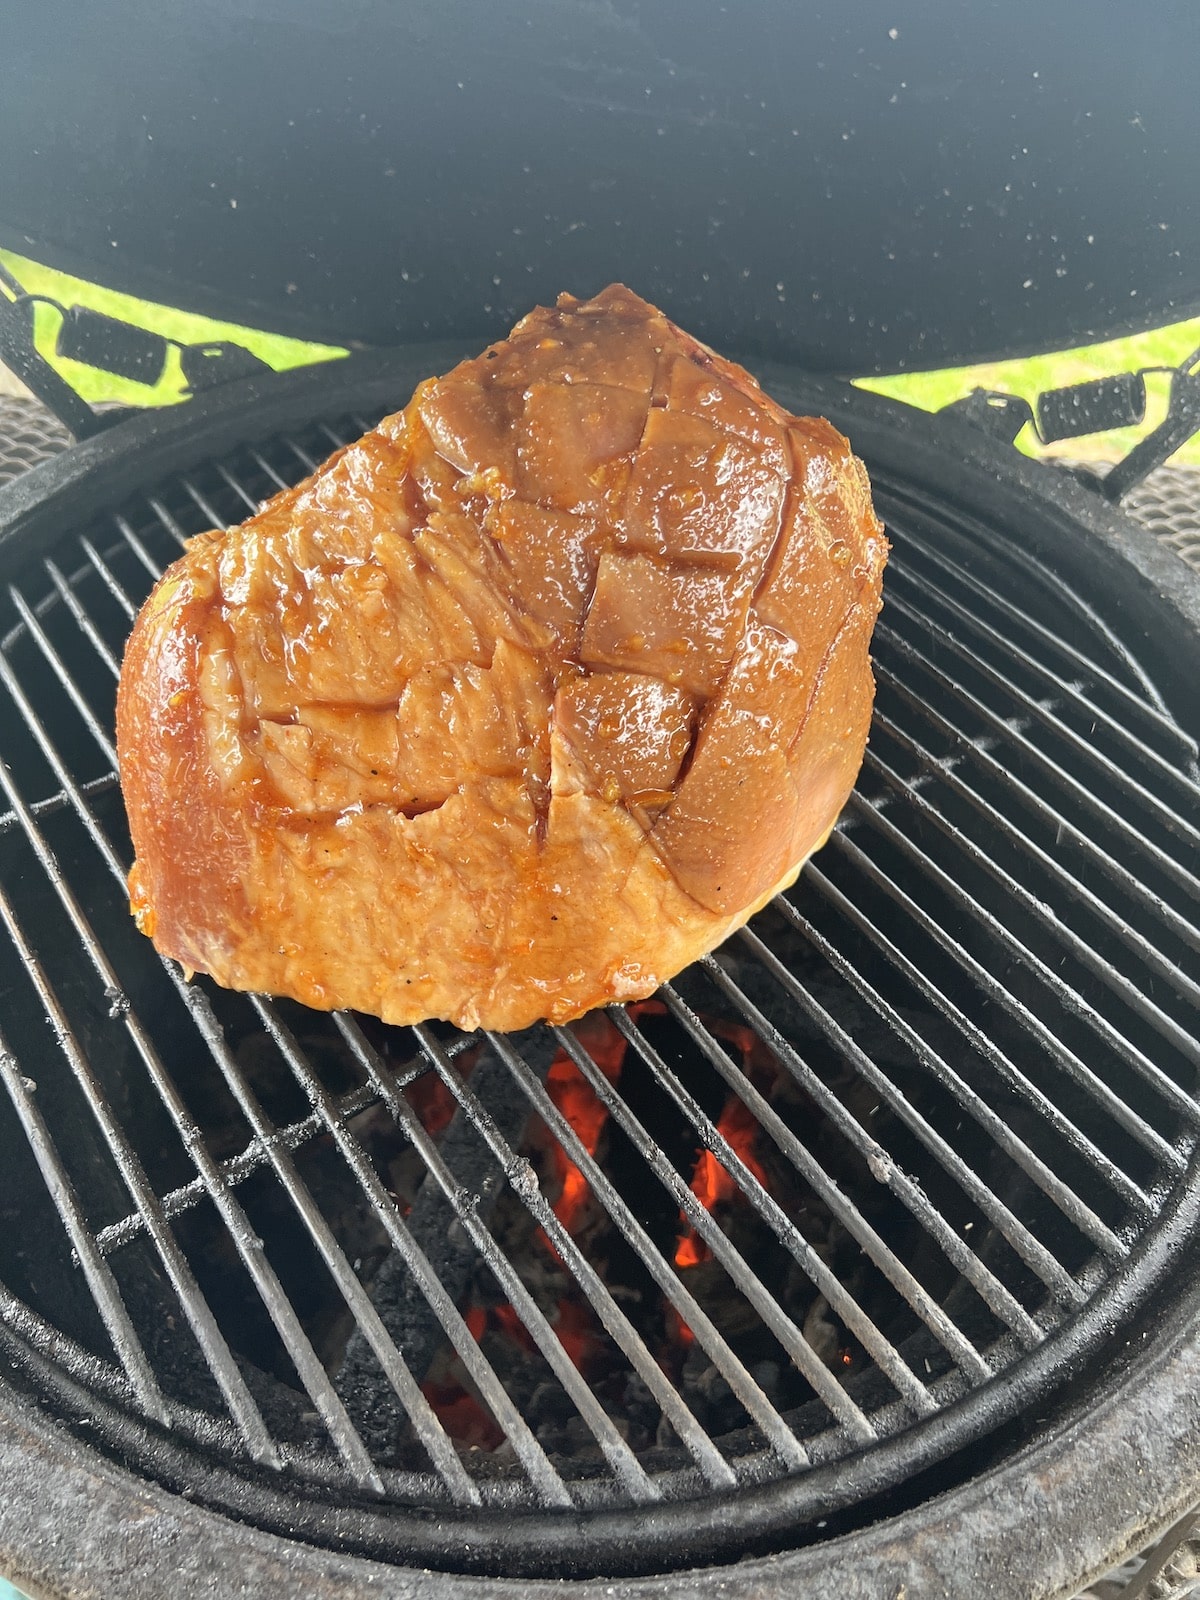 Half ham with glaze on a grill.